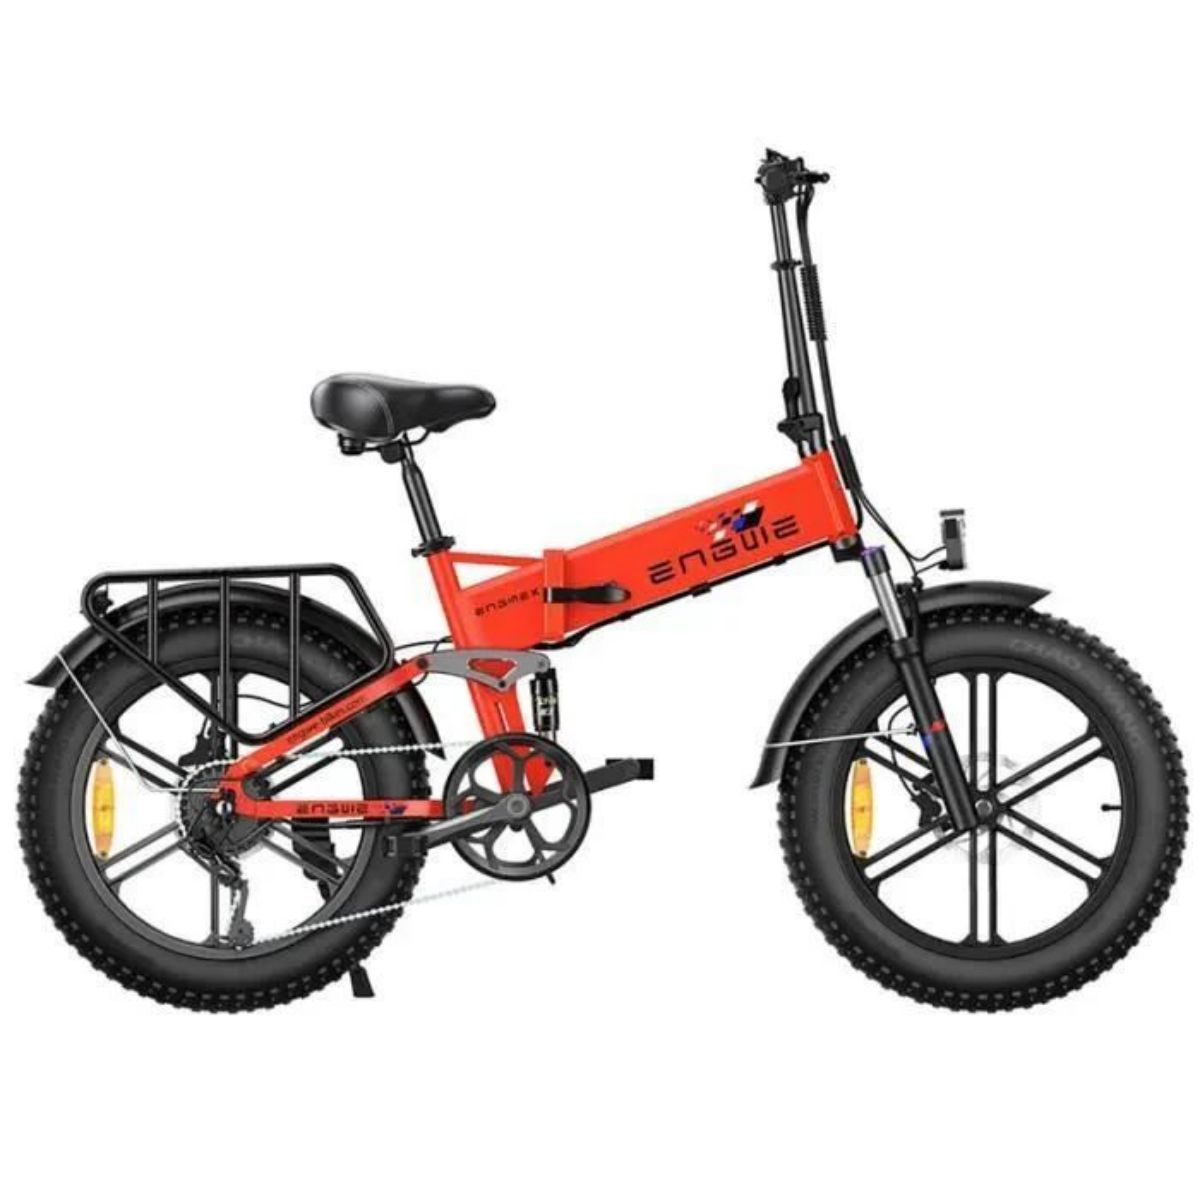 ENGINE Wh, X 624 20 (Laufradgröße: Zoll, Rot) Kompakt-/Faltrad ENGWE Erwachsene-Rad,